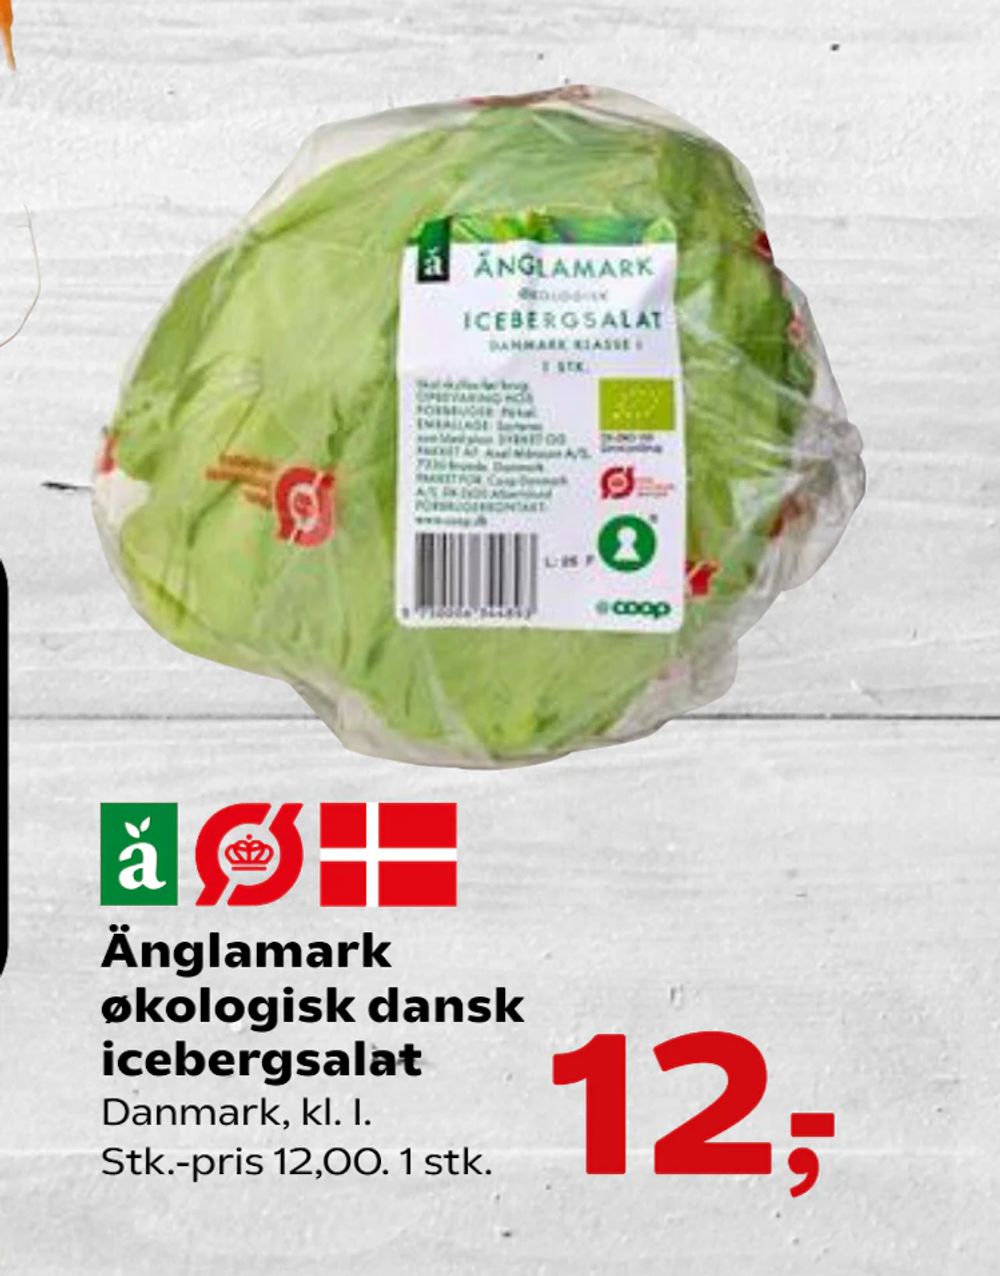 Tilbud på Änglamark økologisk dansk icebergsalat fra Kvickly til 12 kr.